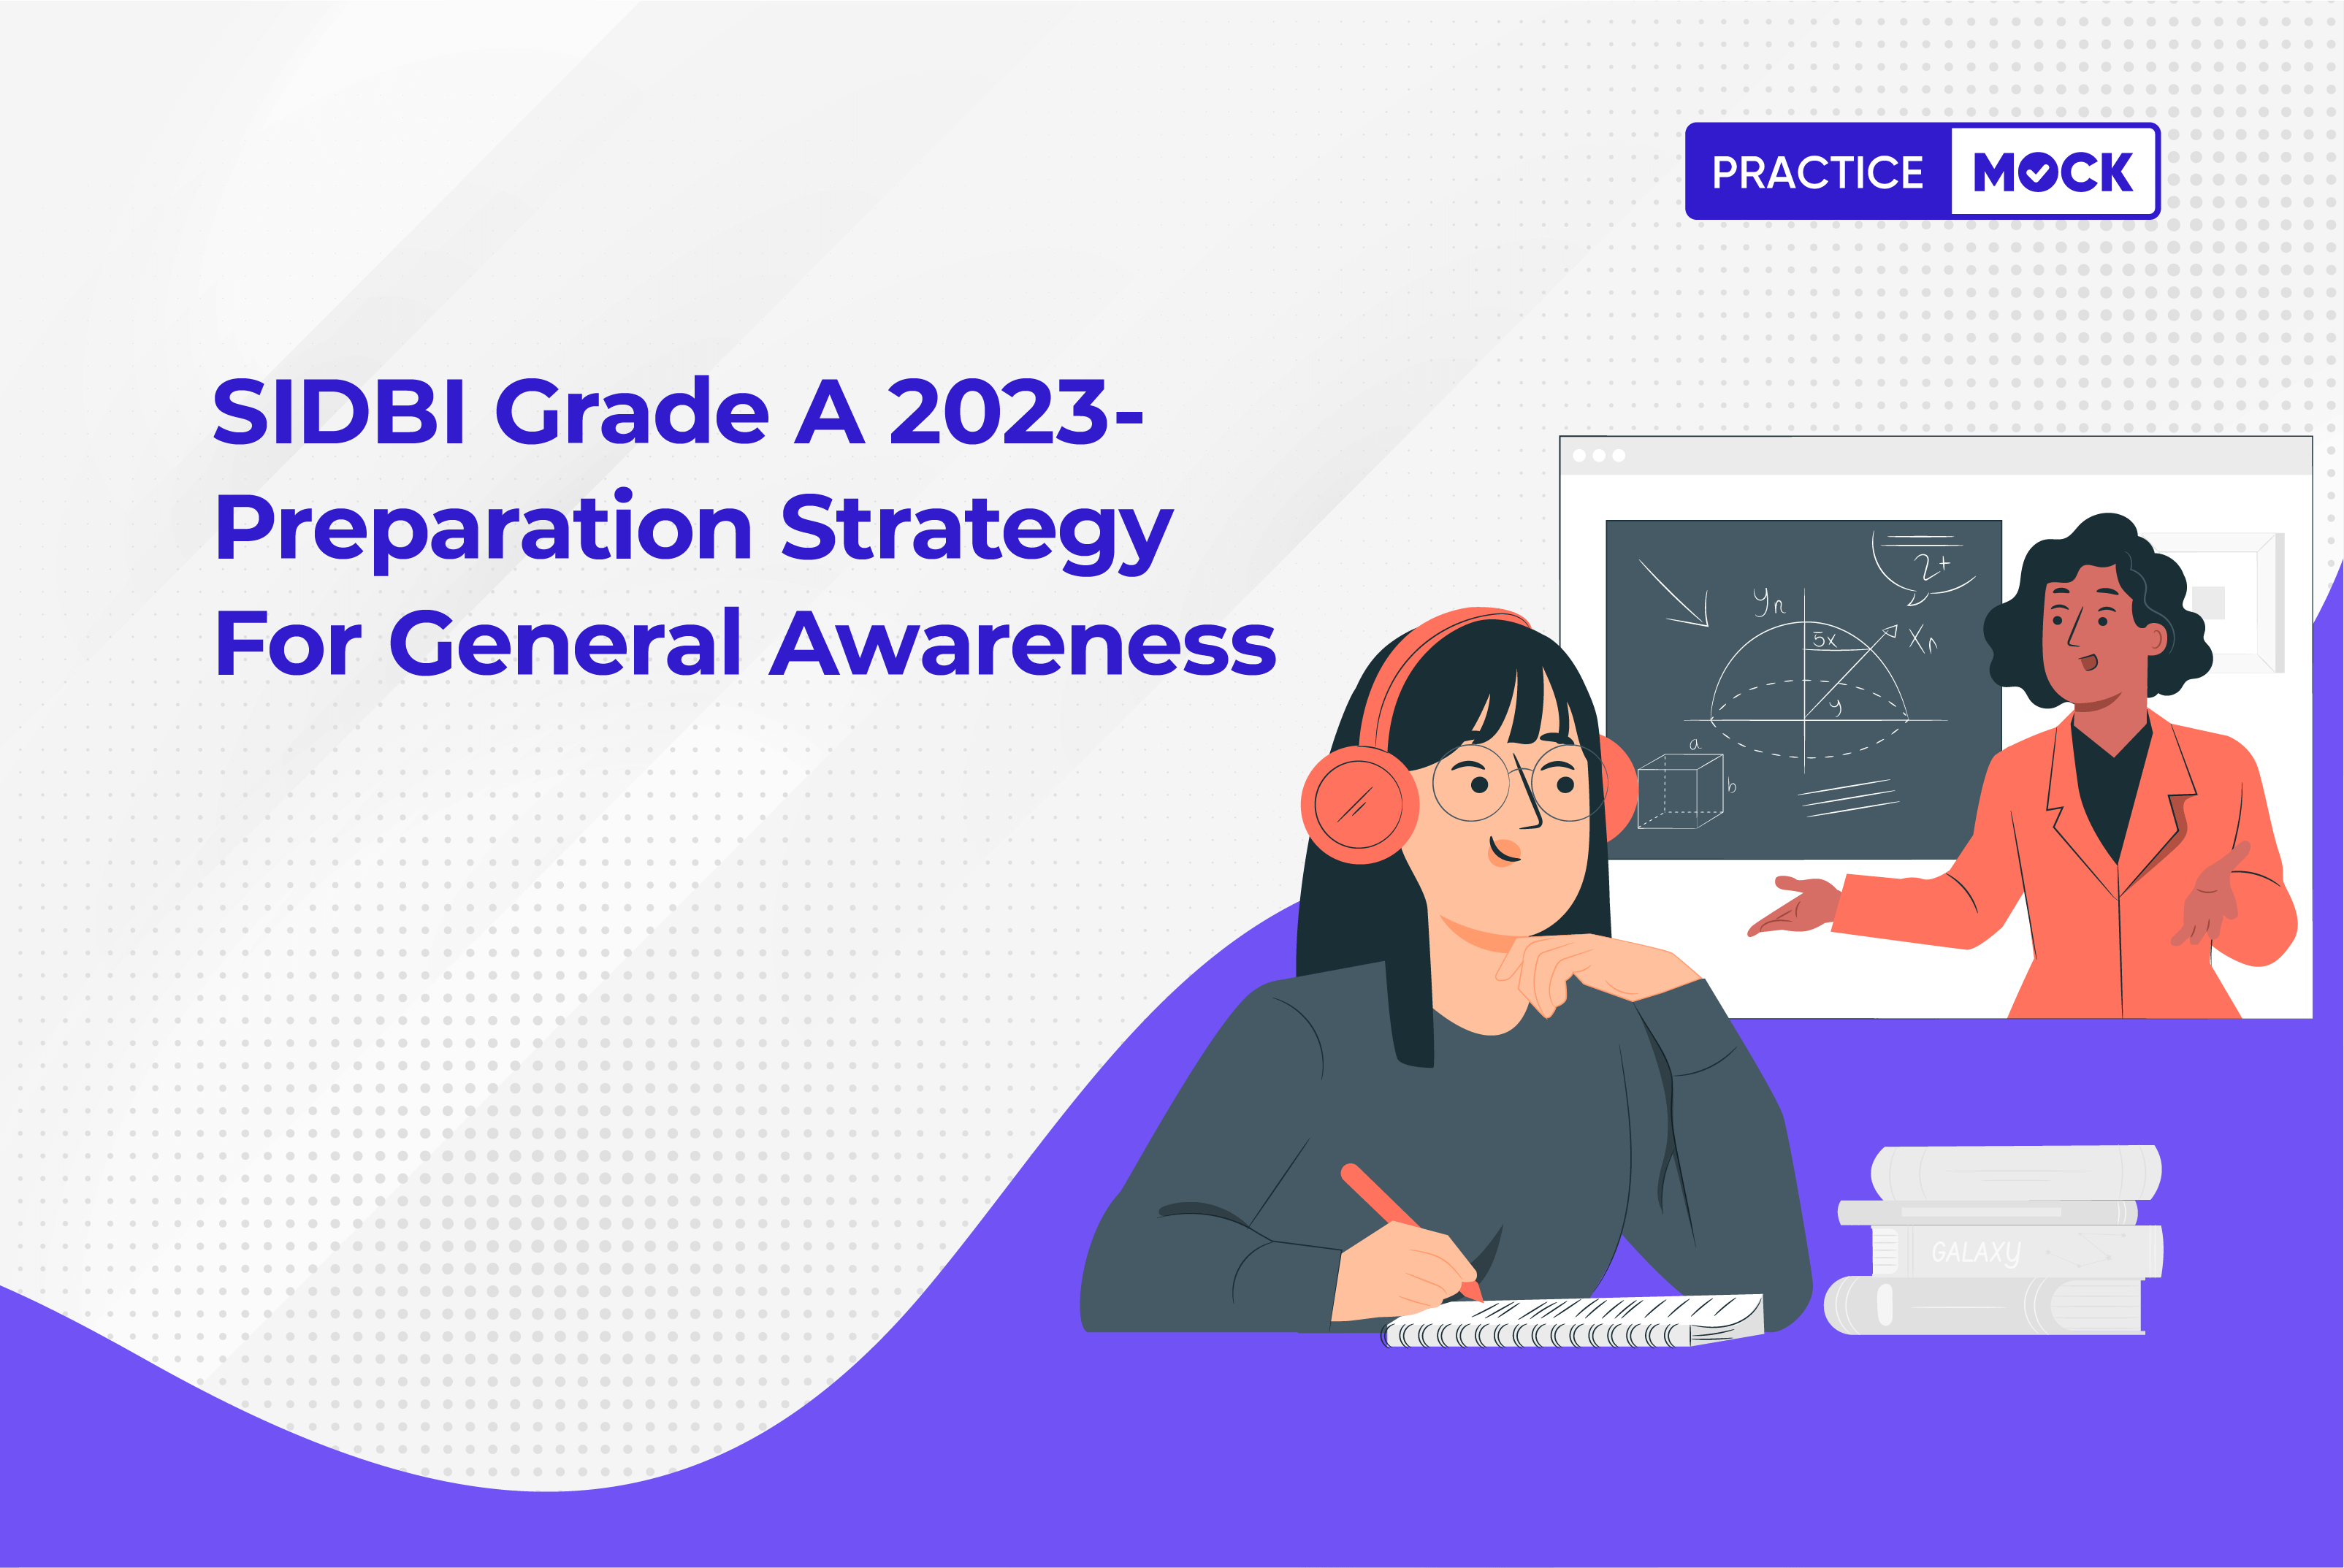 SIDBI Grade A 2023-Preparation Strategy for General Awareness